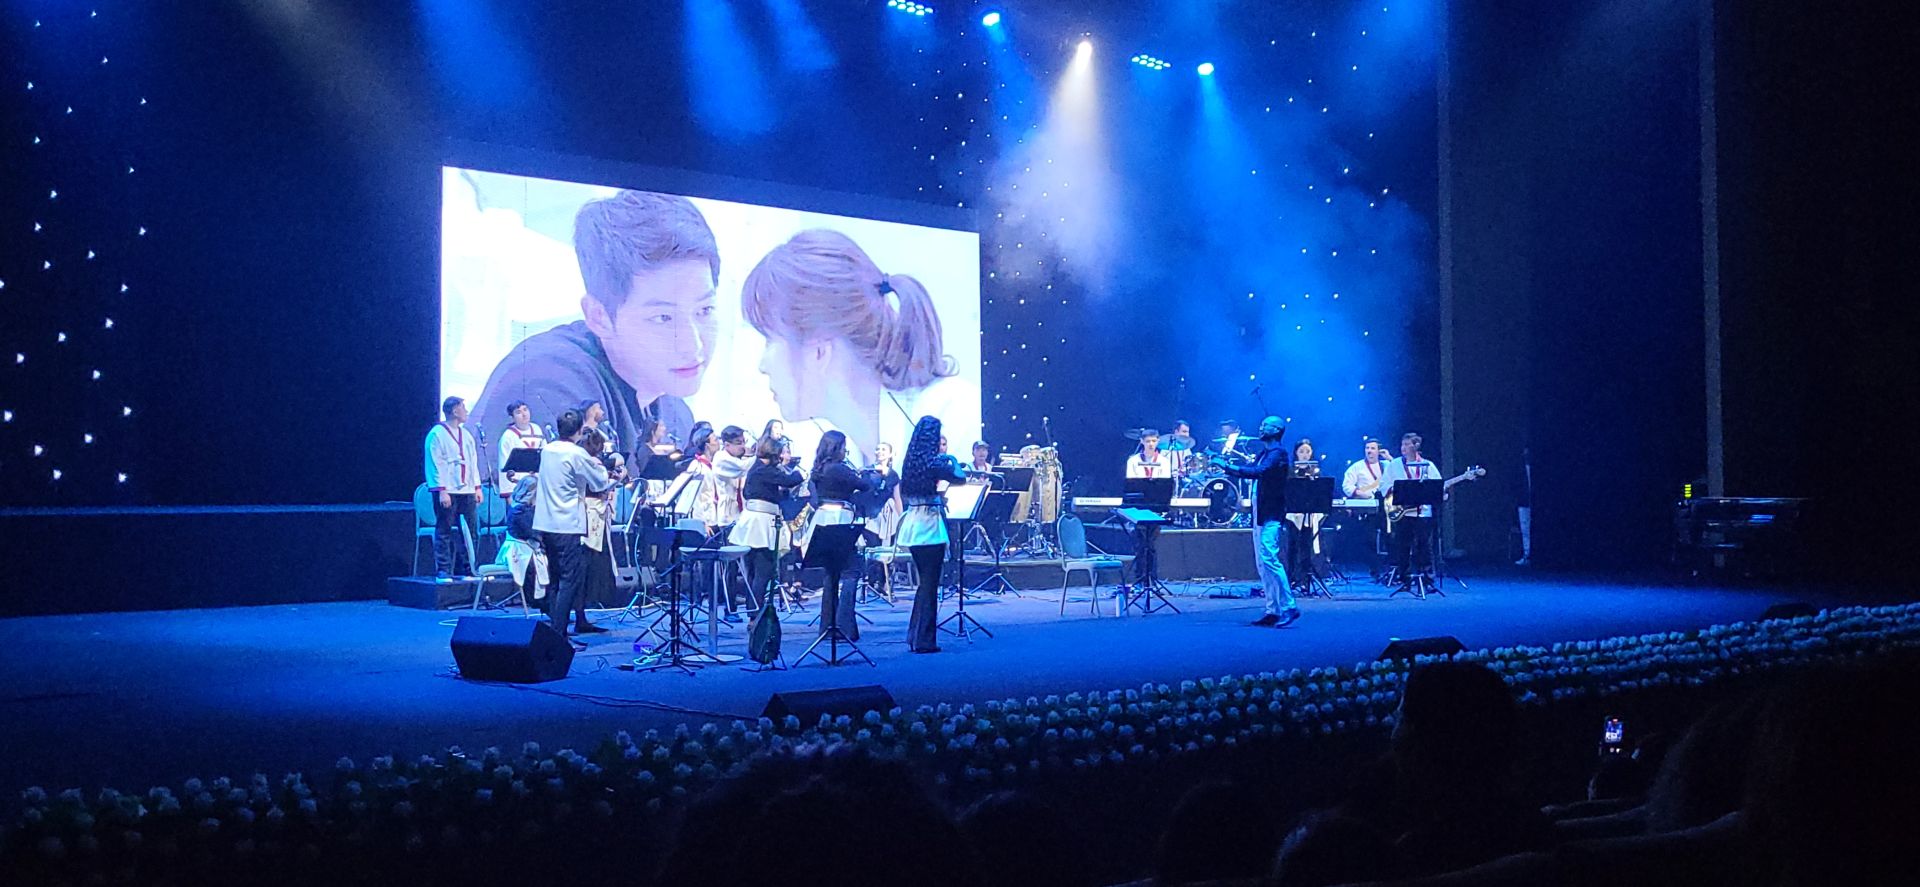 BN Team Orchestra melts hearts of Korean drama fans [PHOTOS]